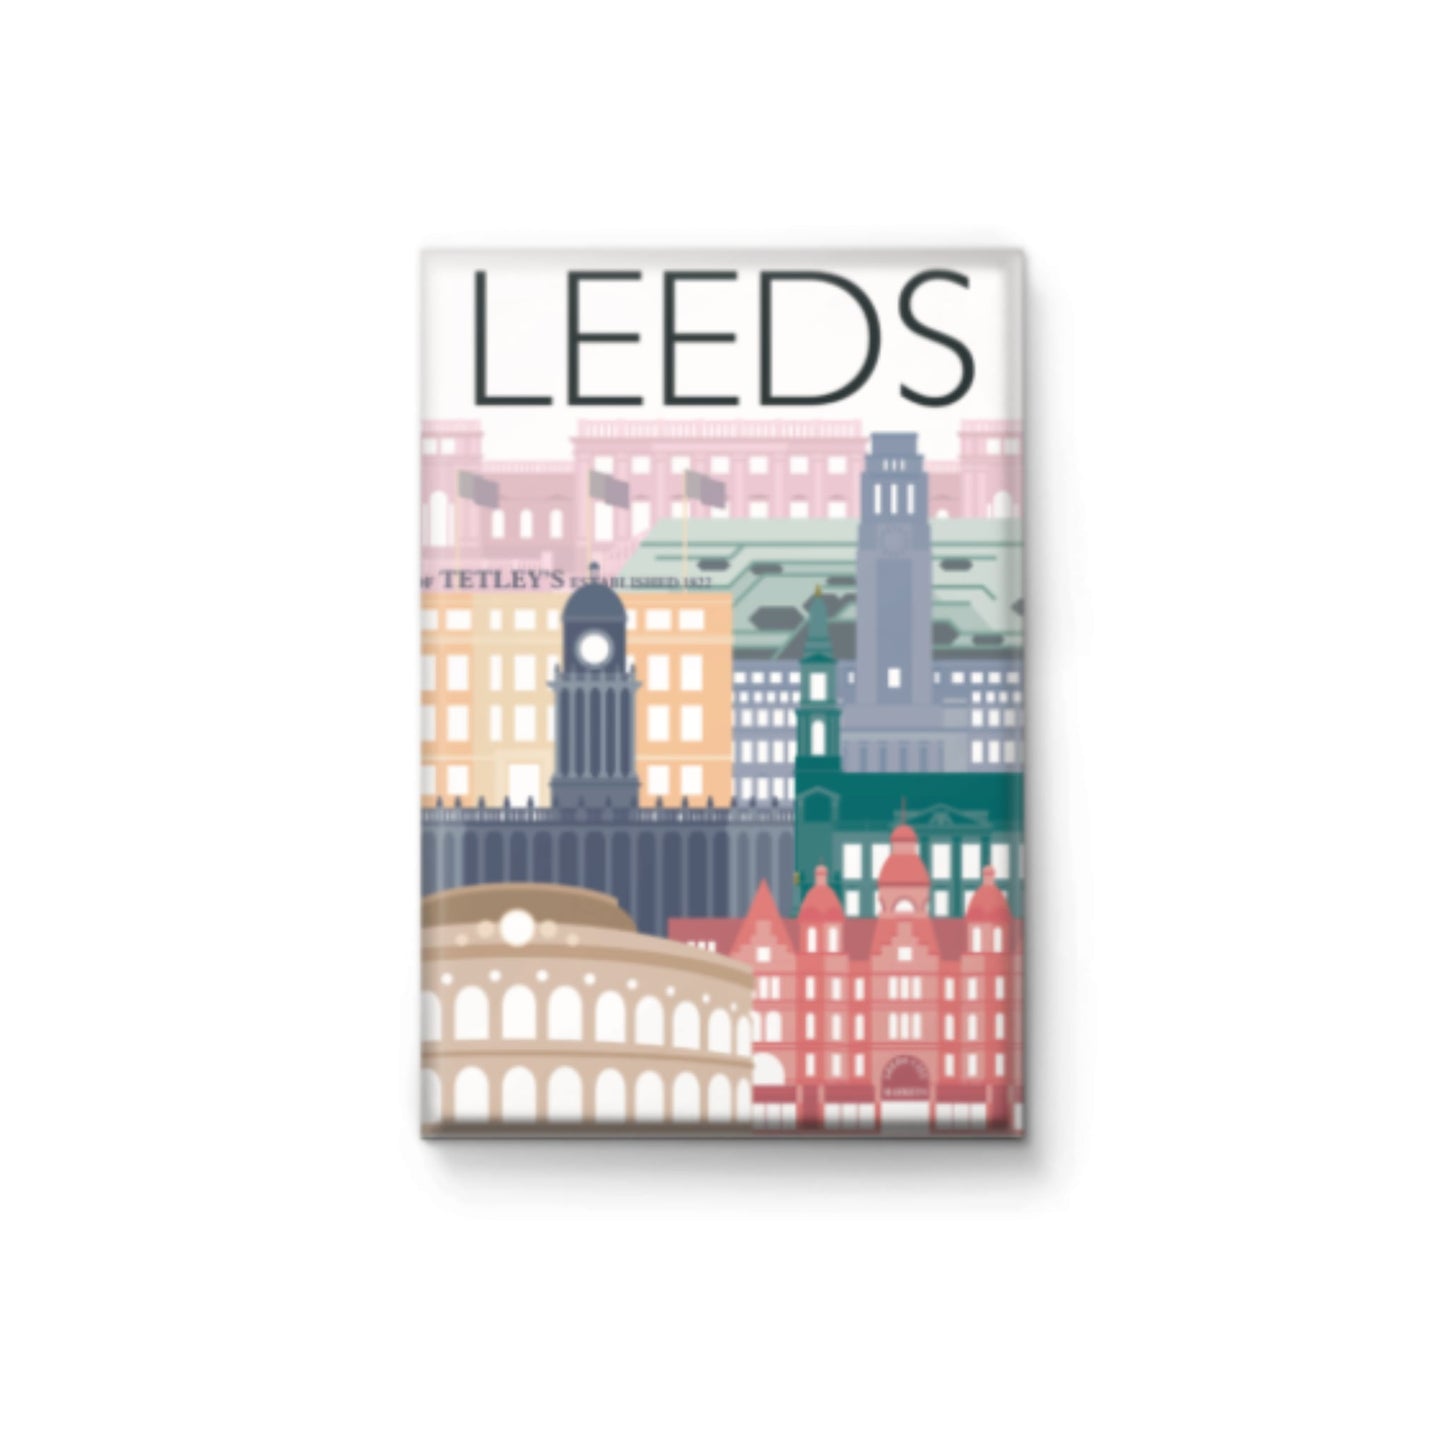 Leeds City Magnet - The Great Yorkshire Shop